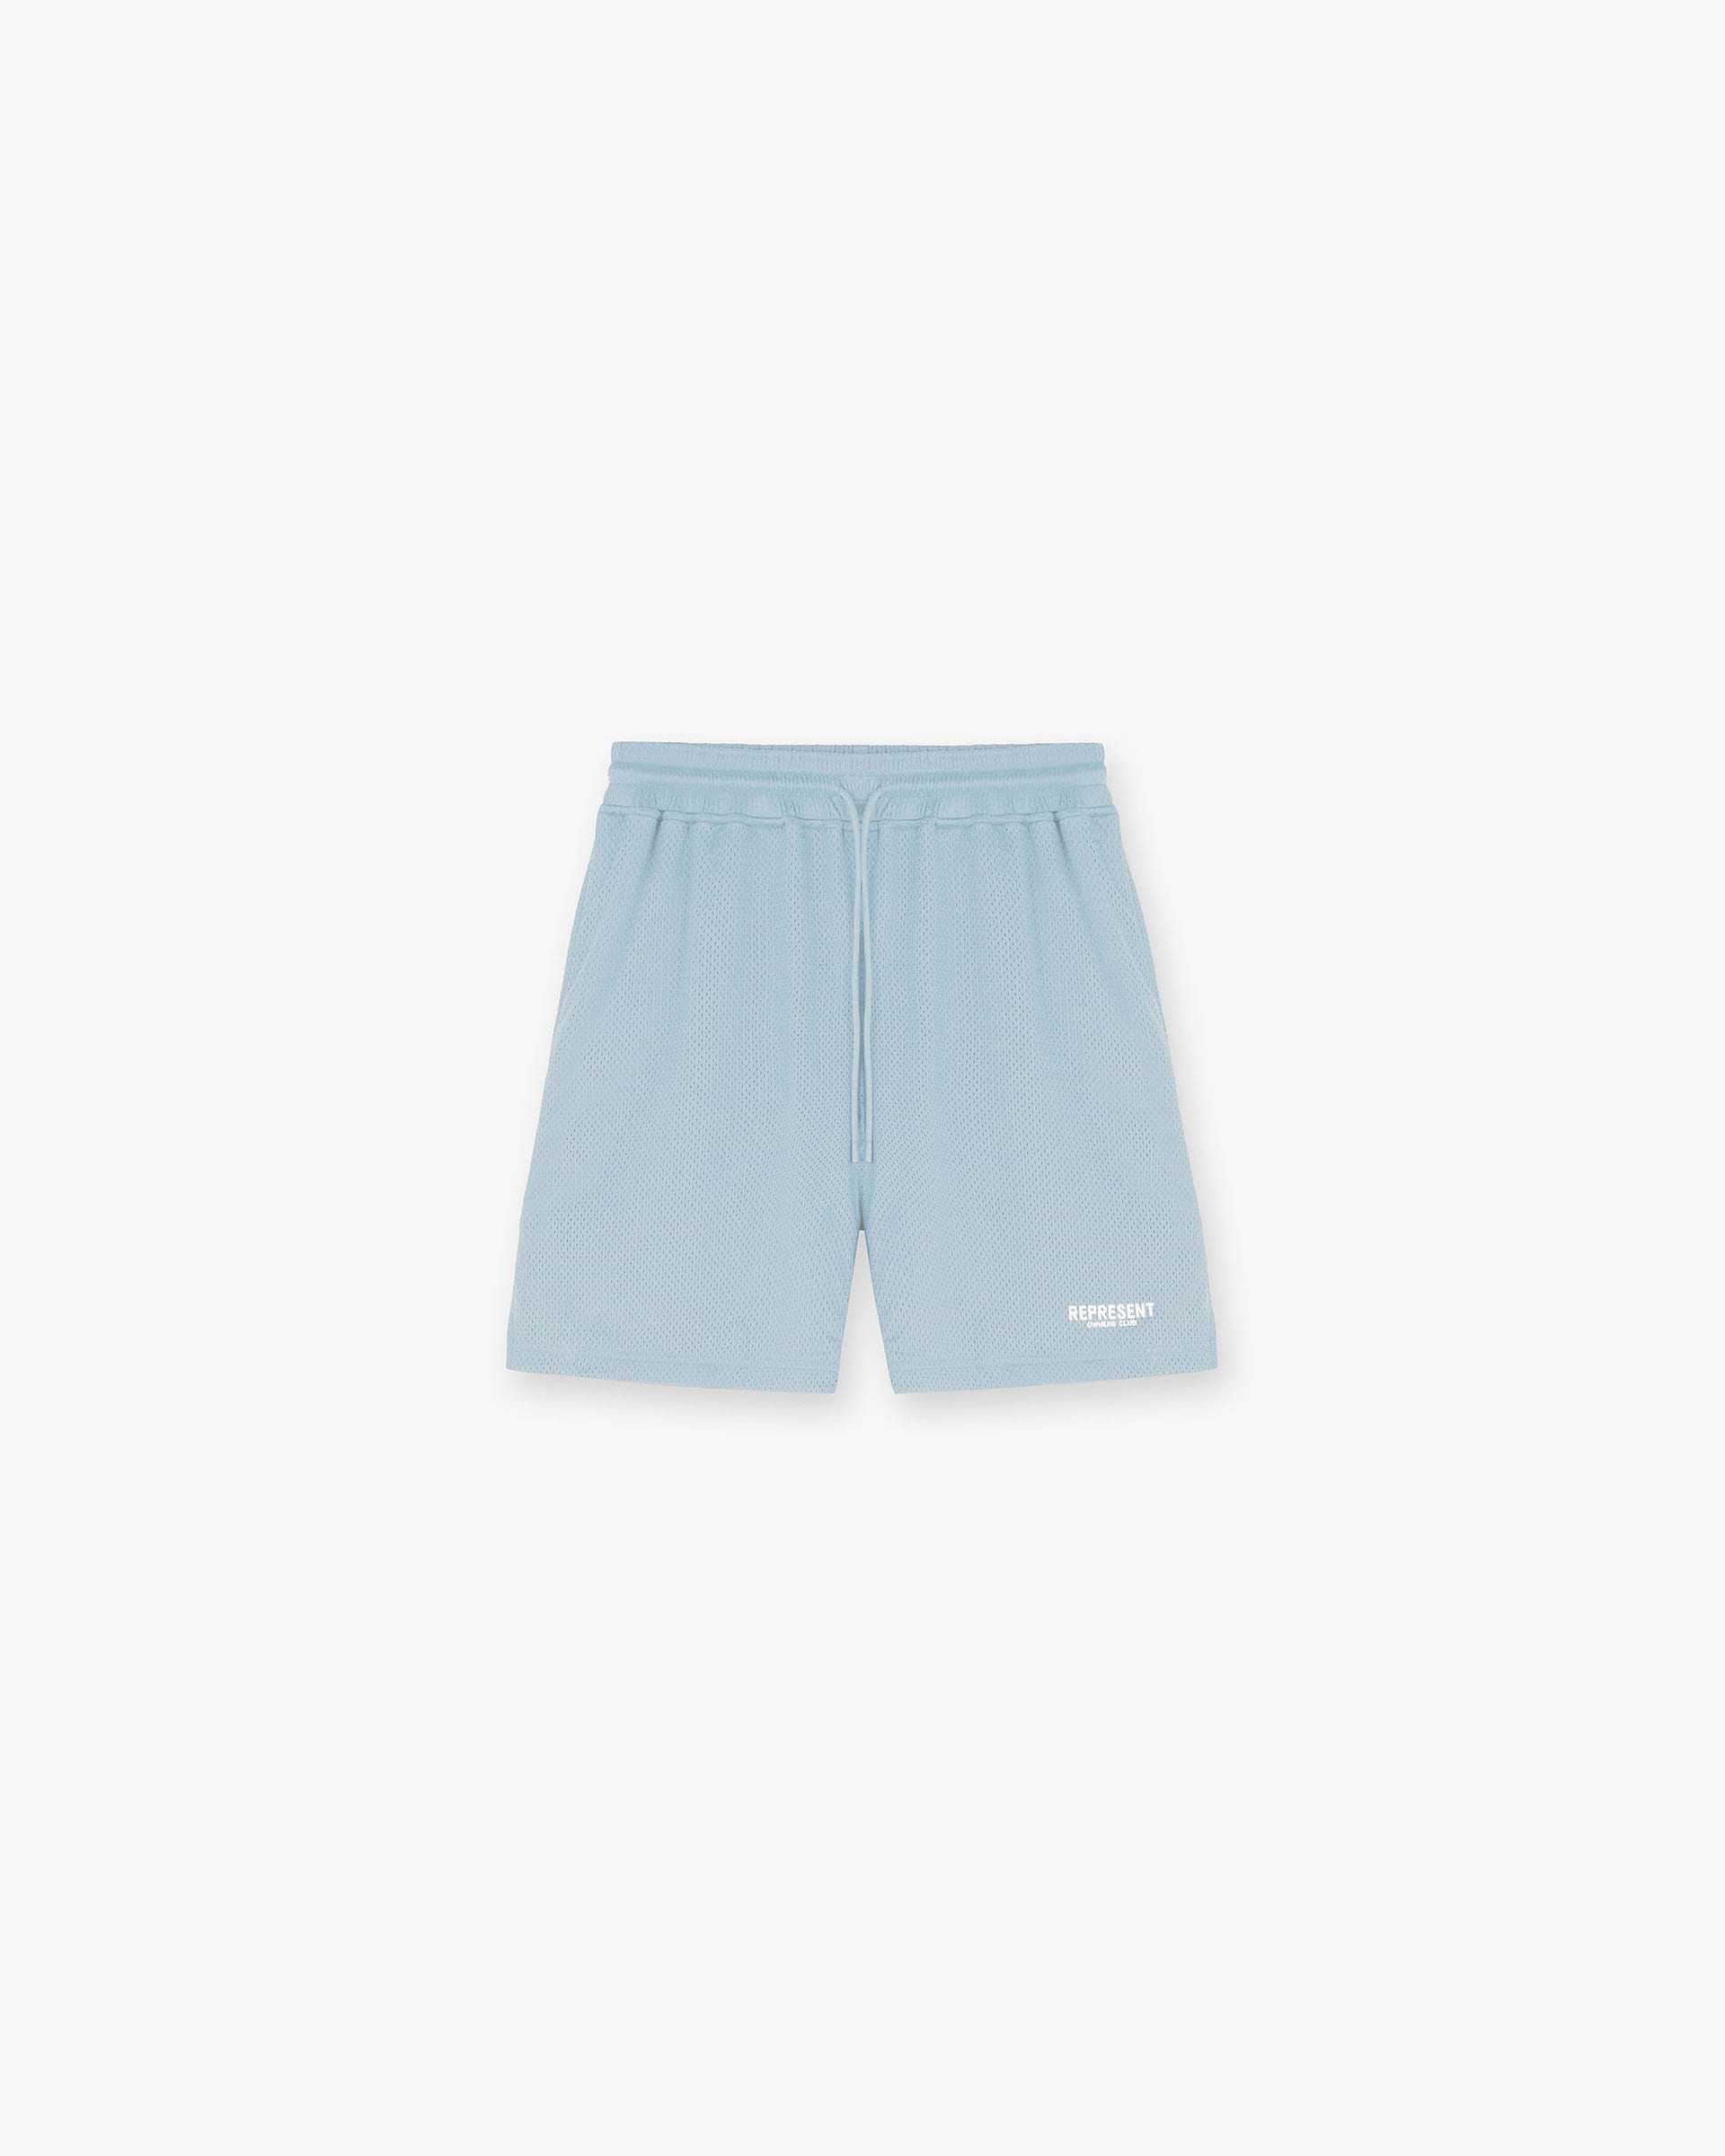 Represent Owners Club Mesh Shorts | Powder Blue Shorts Owners Club | Represent Clo